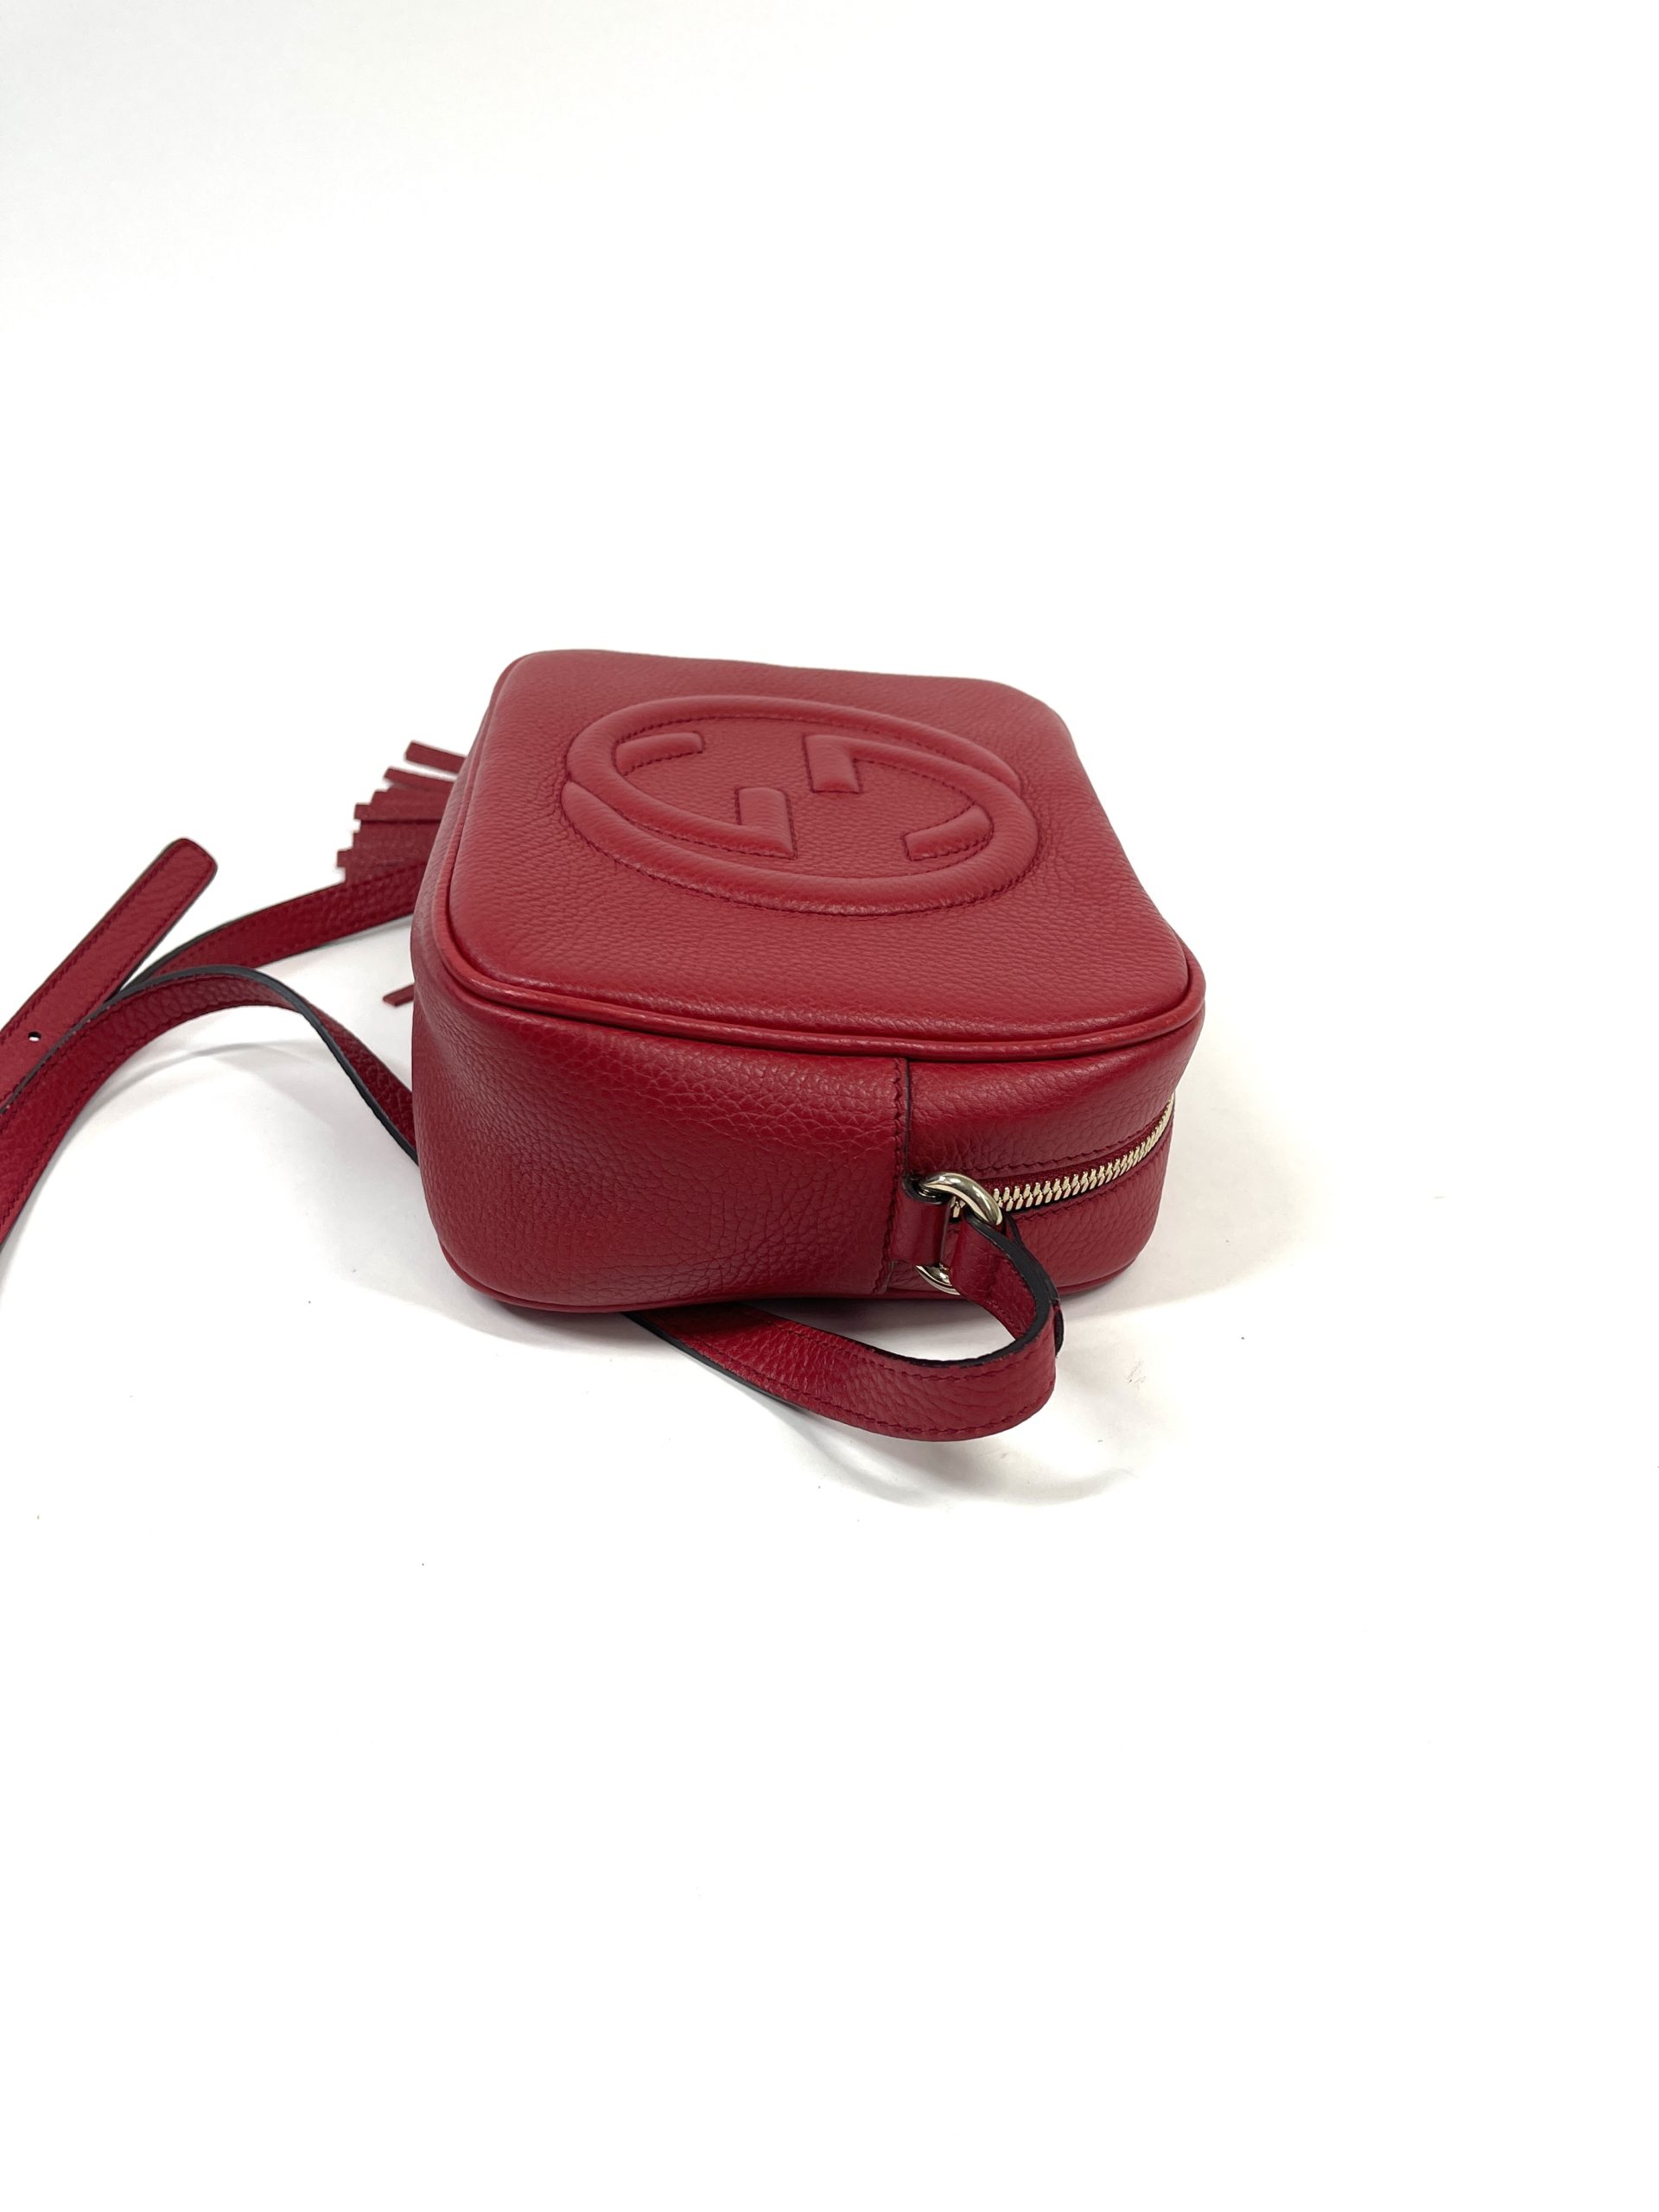 Gucci Soho Disco Vibrant Red Calfskin Leather Shoulder Bag - MyDesignerly